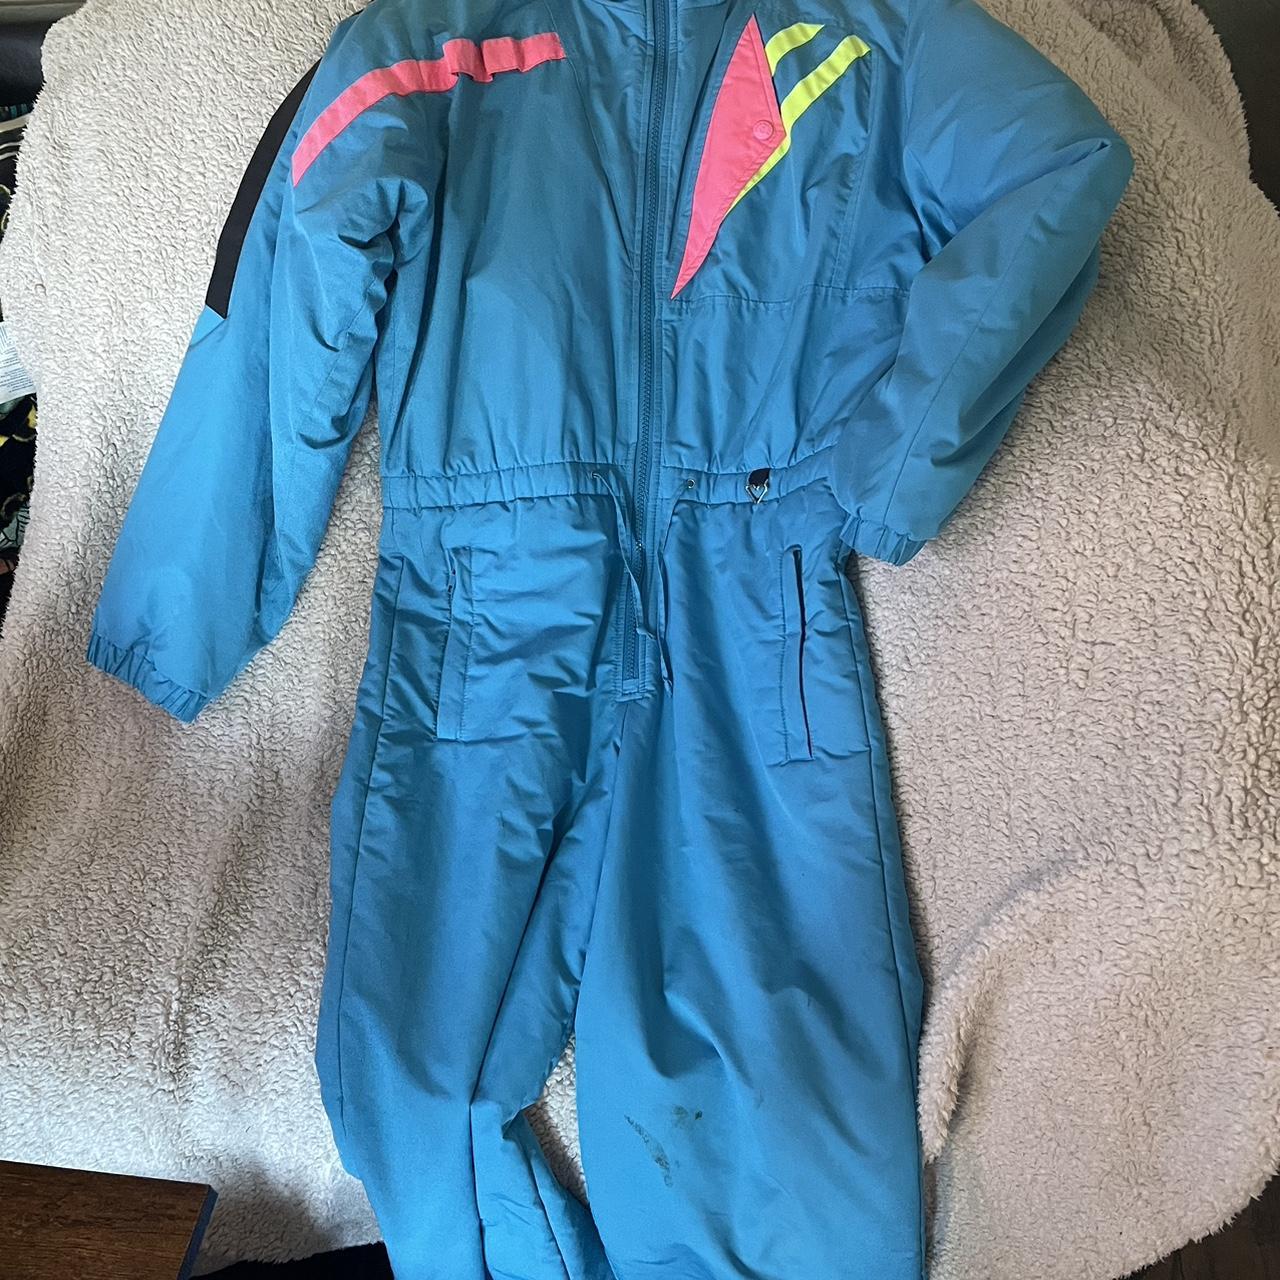 Ski suit - Depop